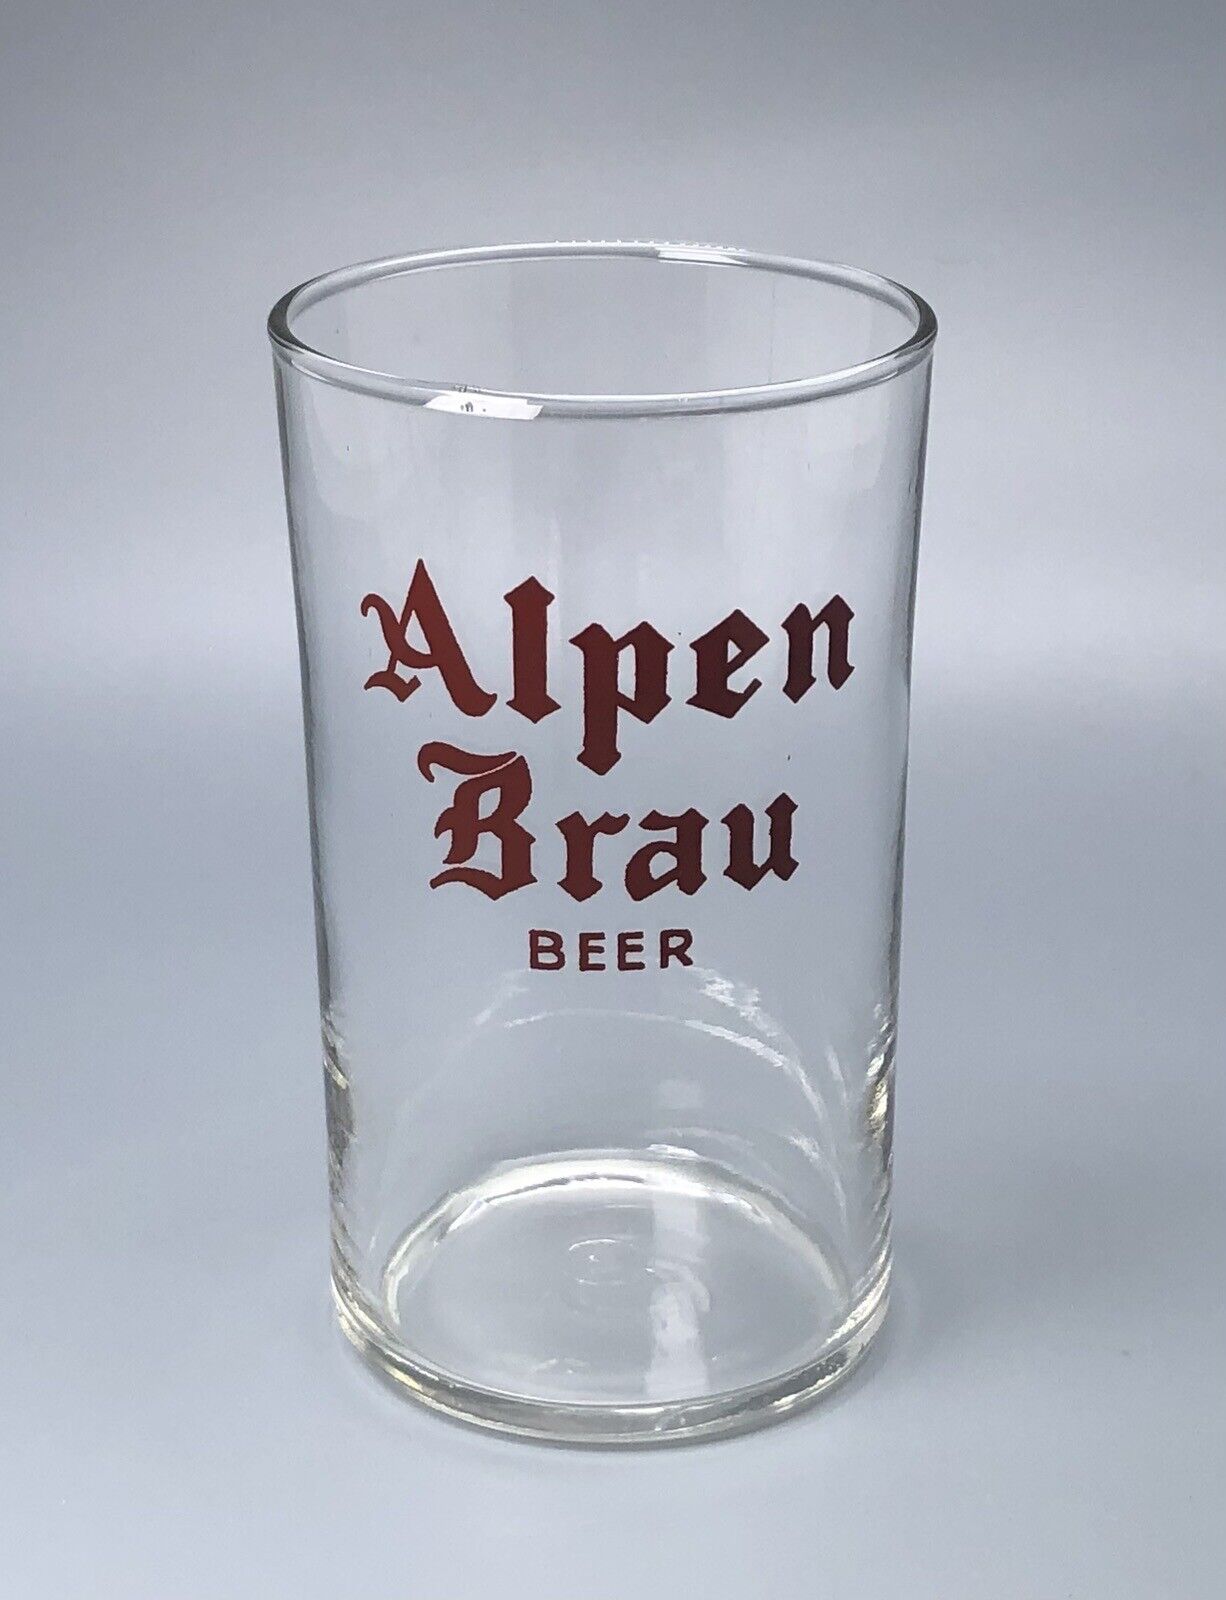 Alpen Brau Beer Shell Glass / Vtg Barware Advertising / Man Cave Home Bar Decor